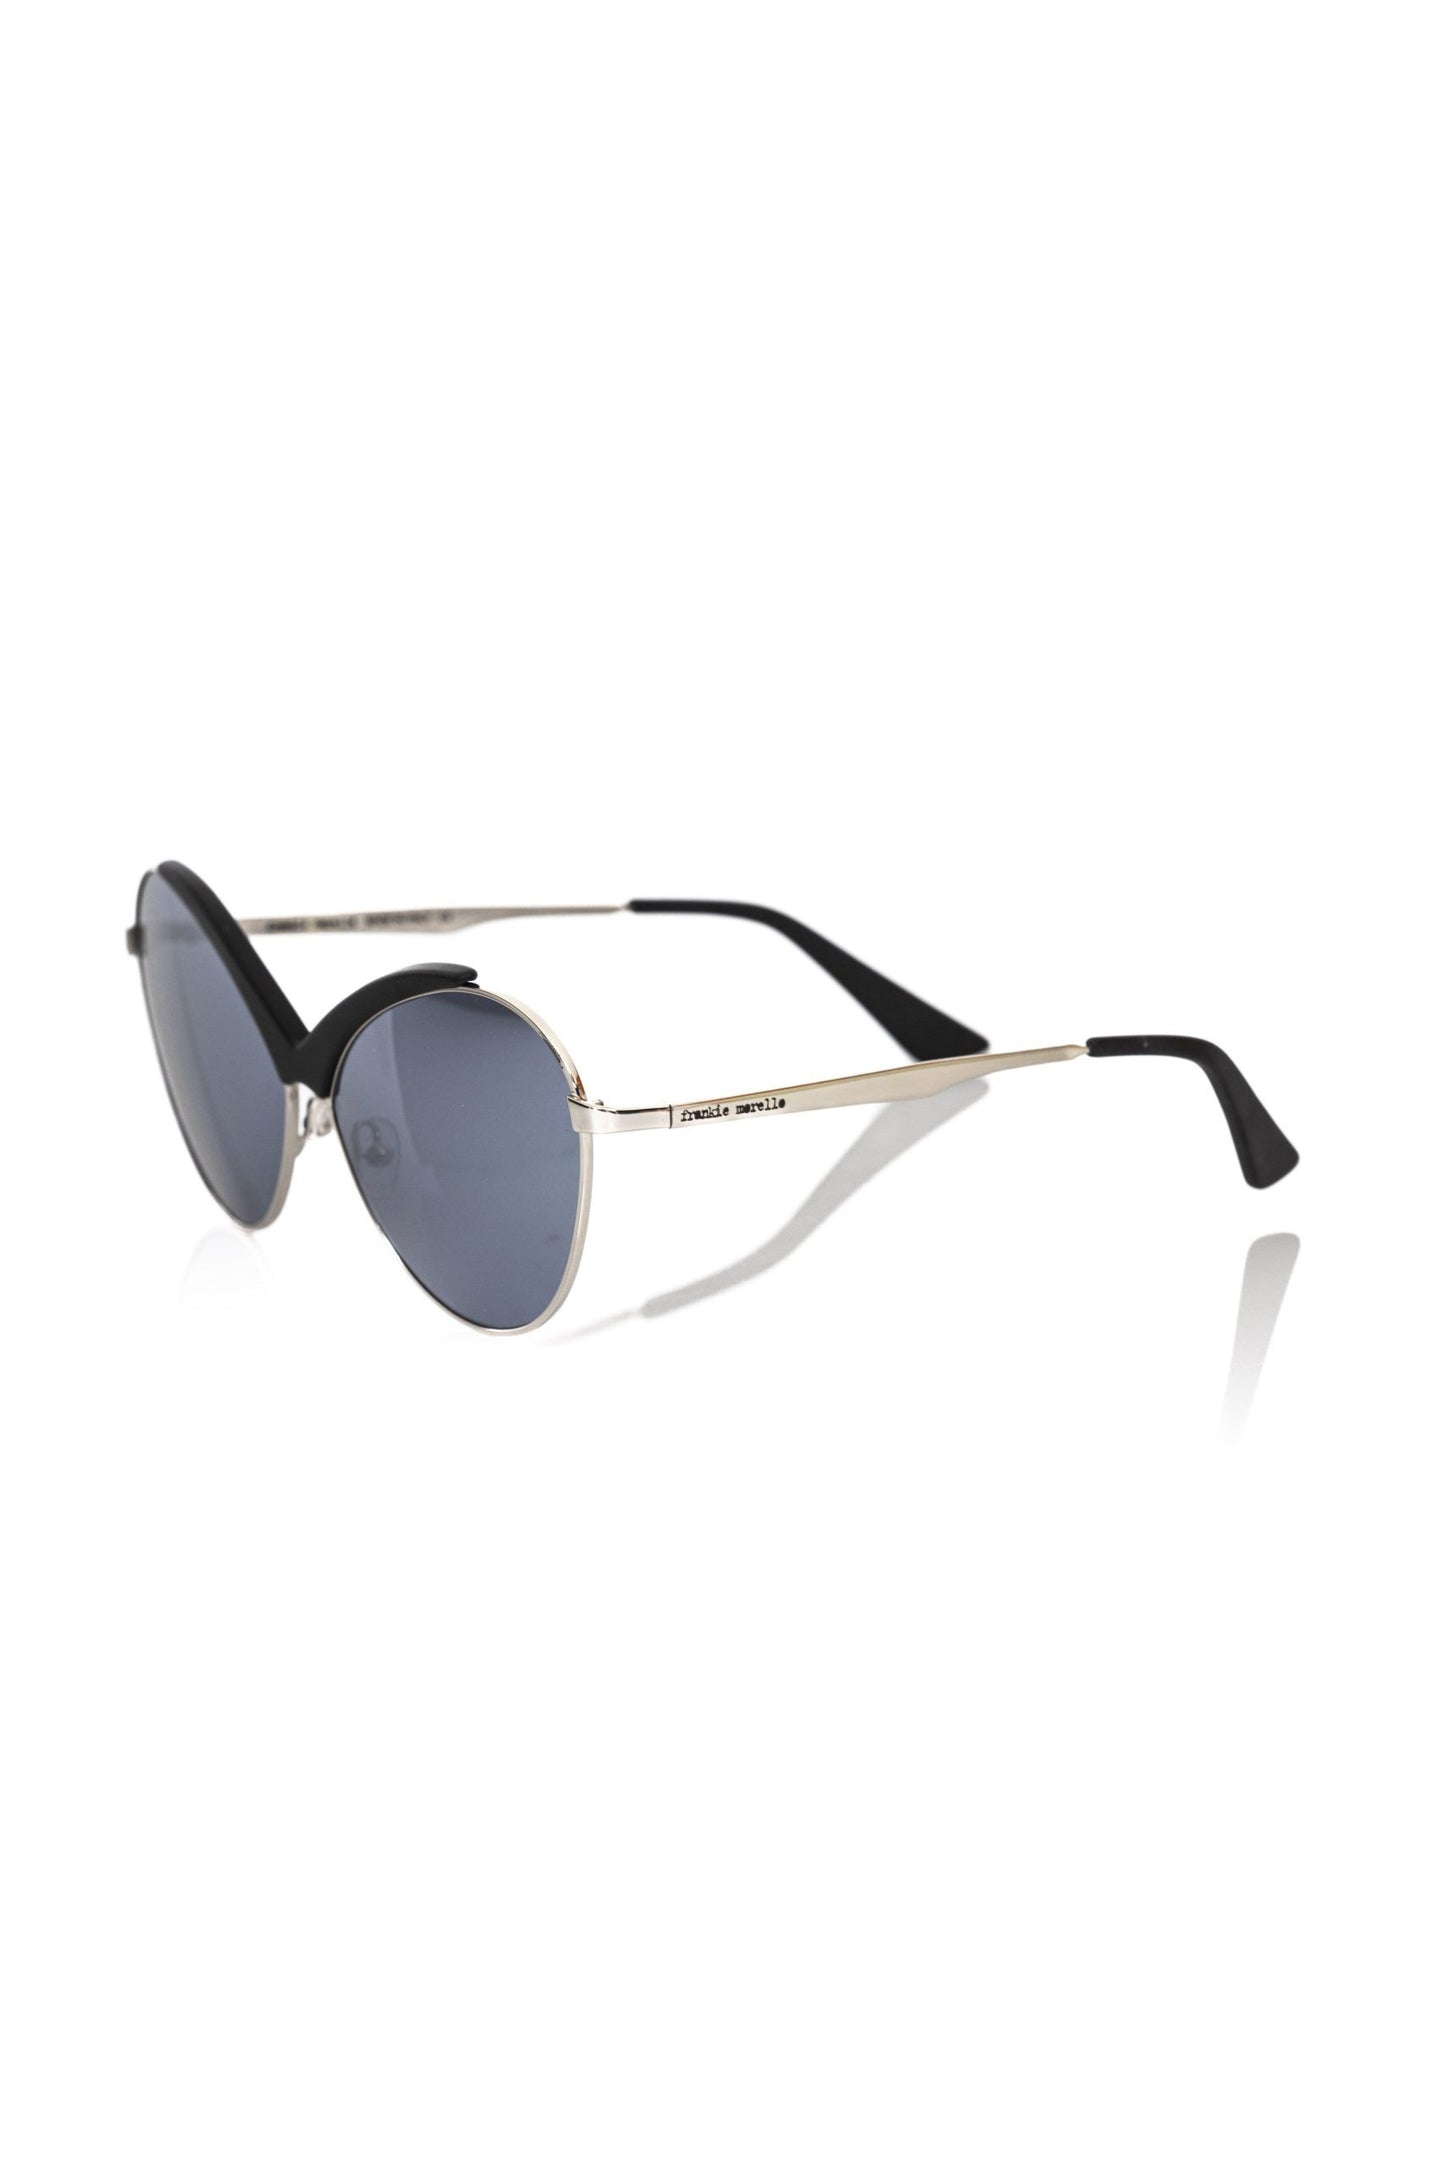 Frankie Morello FRMO-22084 Black Metallic Fibre Sunglasses